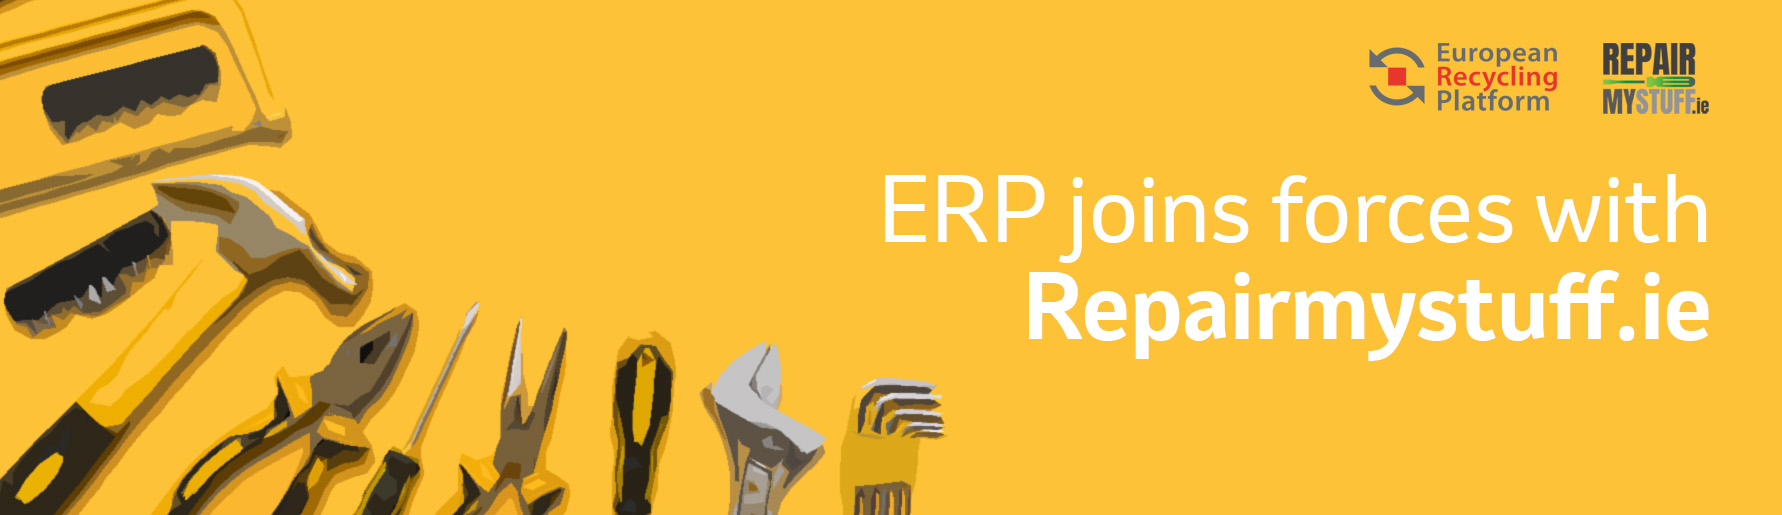 ERP-Banner-Repairmystuff